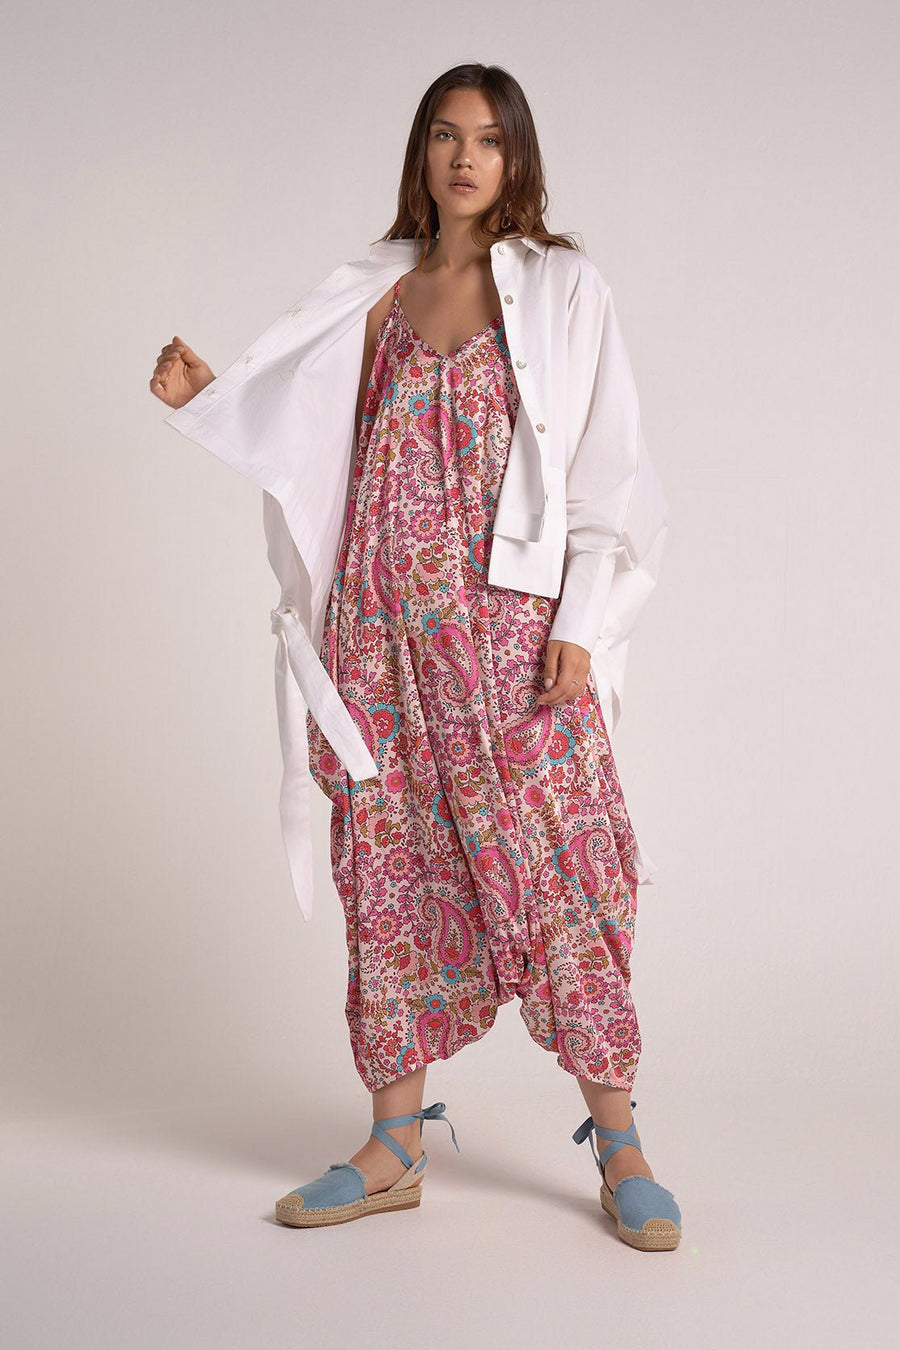 Paisley in Pink Jumpsuit - nahlaelalfydesigns